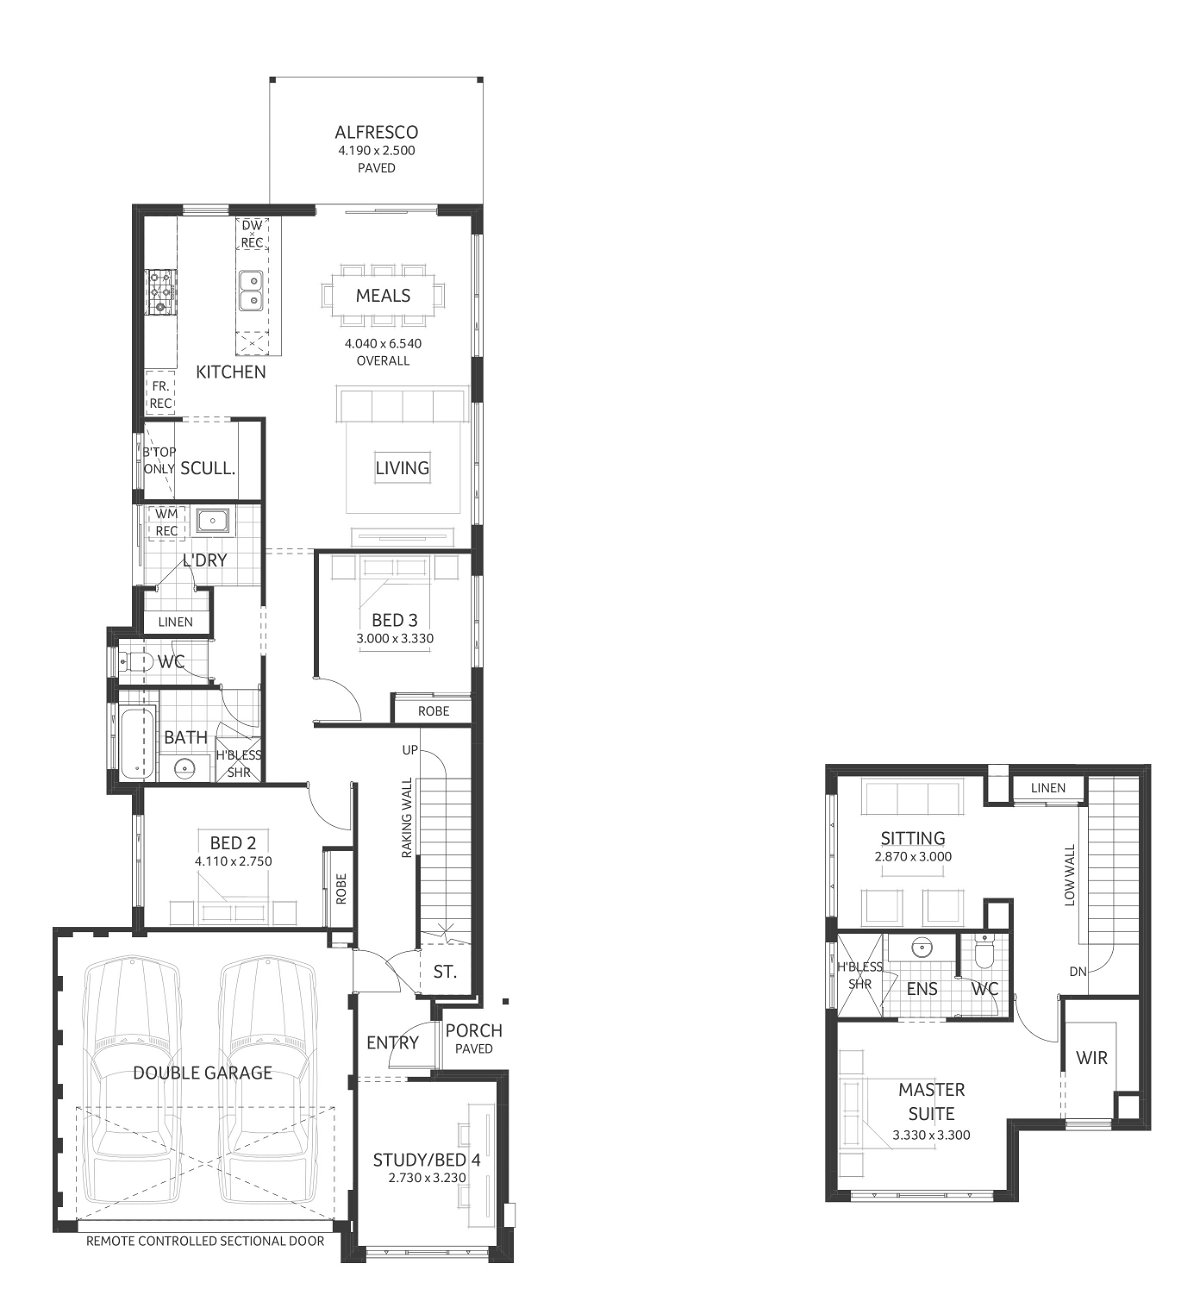 Plunkett Homes - Menora | Lifestyle - Floorplan - Menora Lifestyle Contemporary Marketing Plan